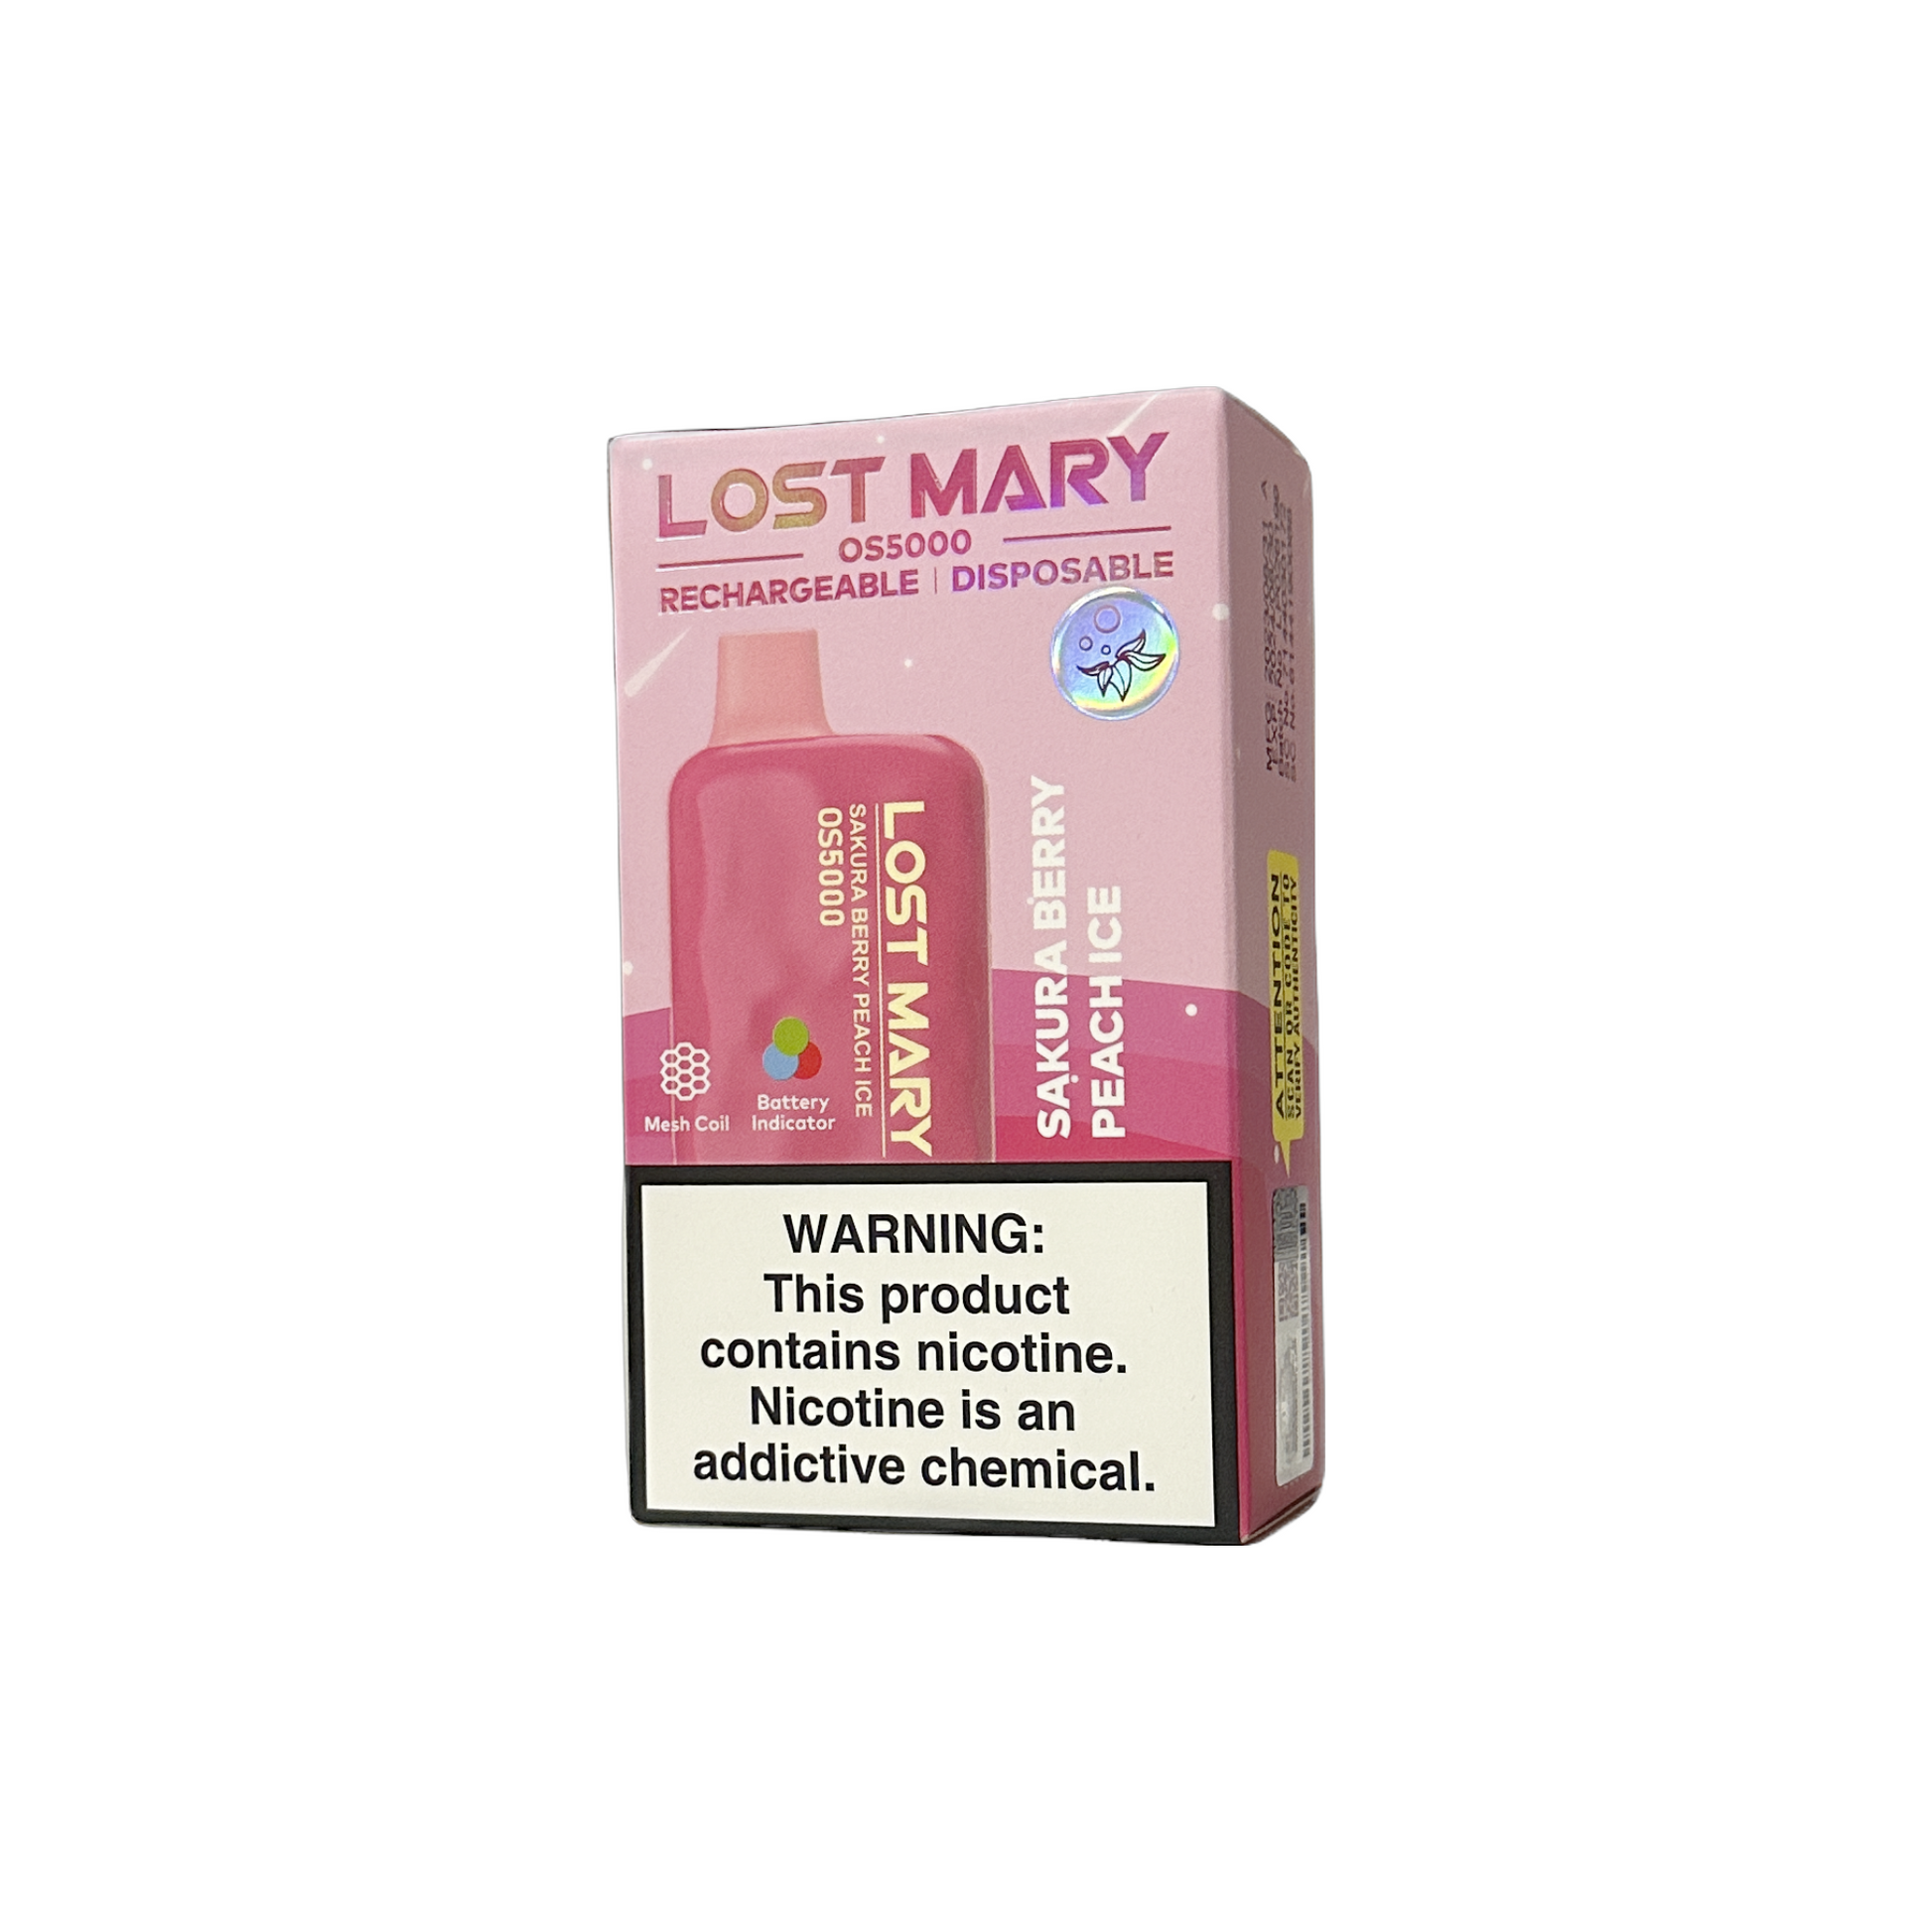 Lost Mary OS5000 Sakura Berry Peach Ice